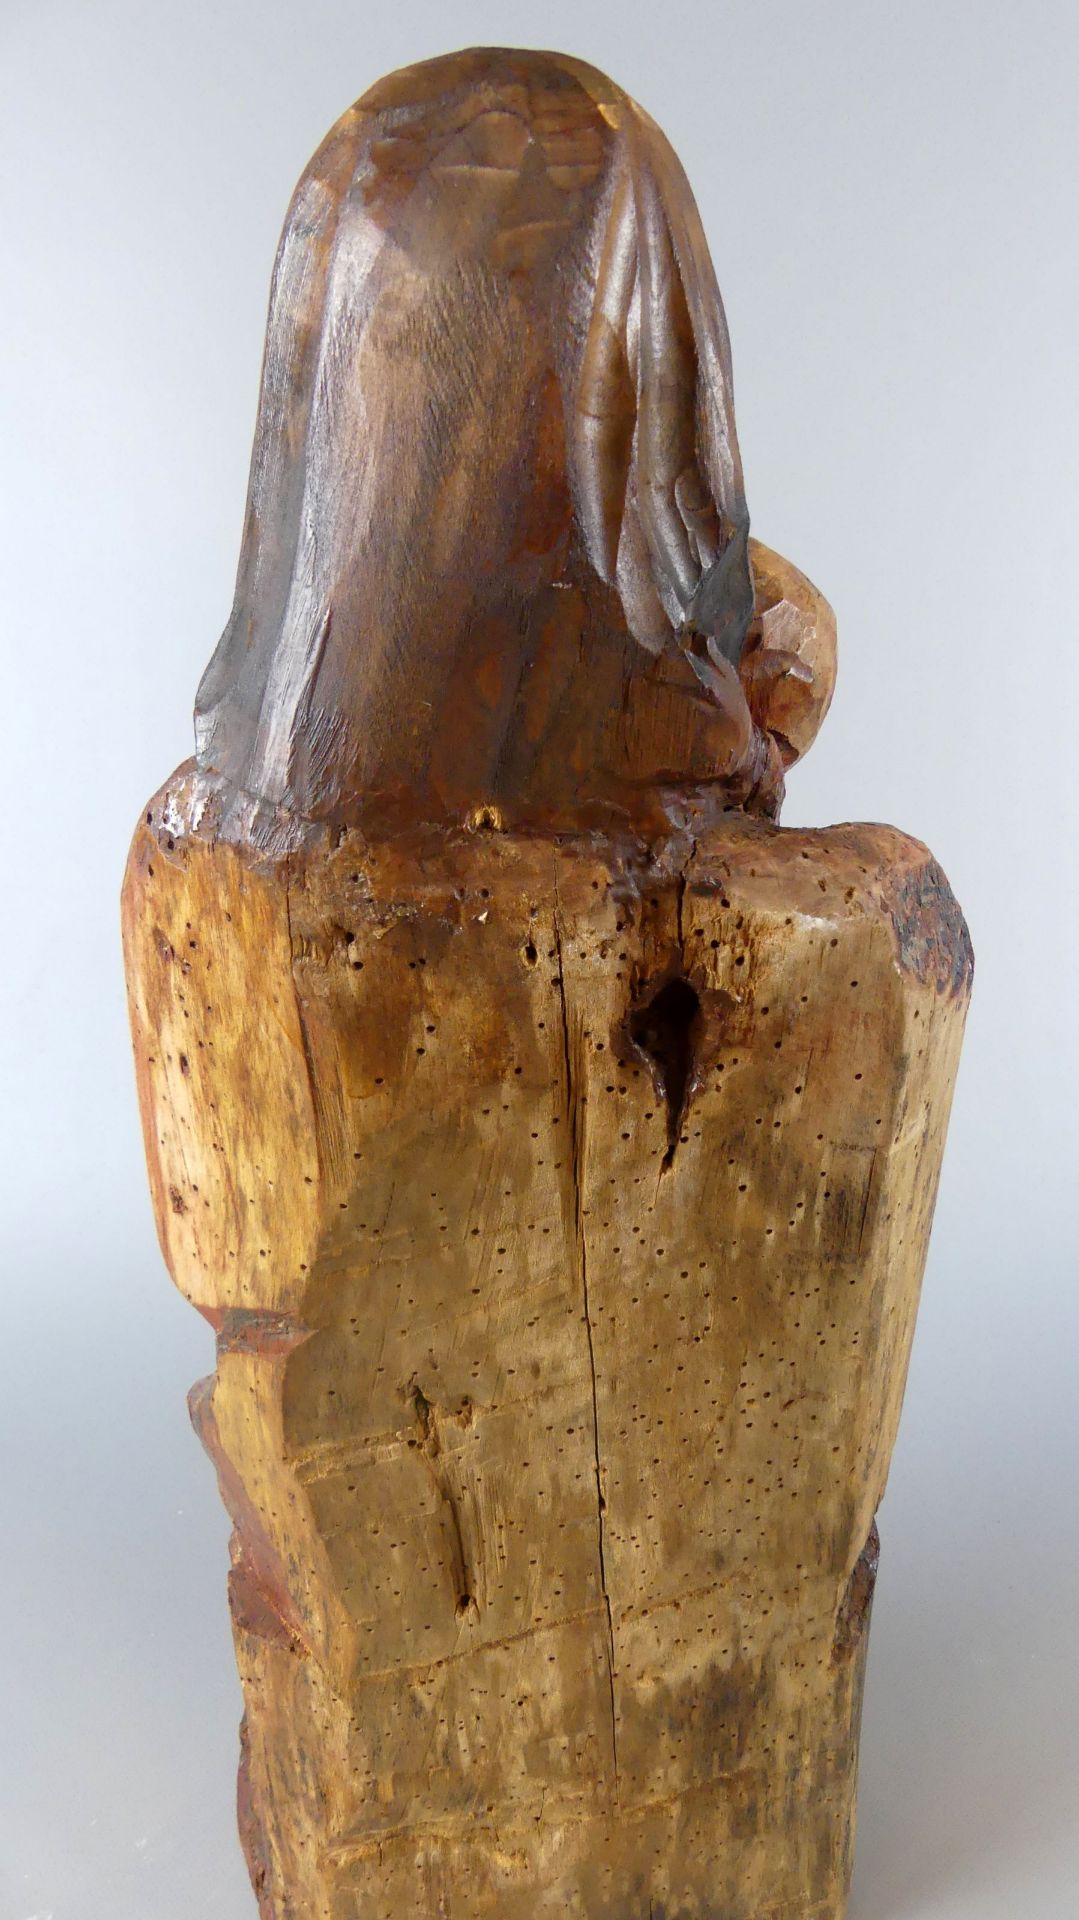 Madonna mit Kind, Holz, 19. Jhdt., H. ca. 54 cm, wohl mal mit Wurmbefall - Image 3 of 3